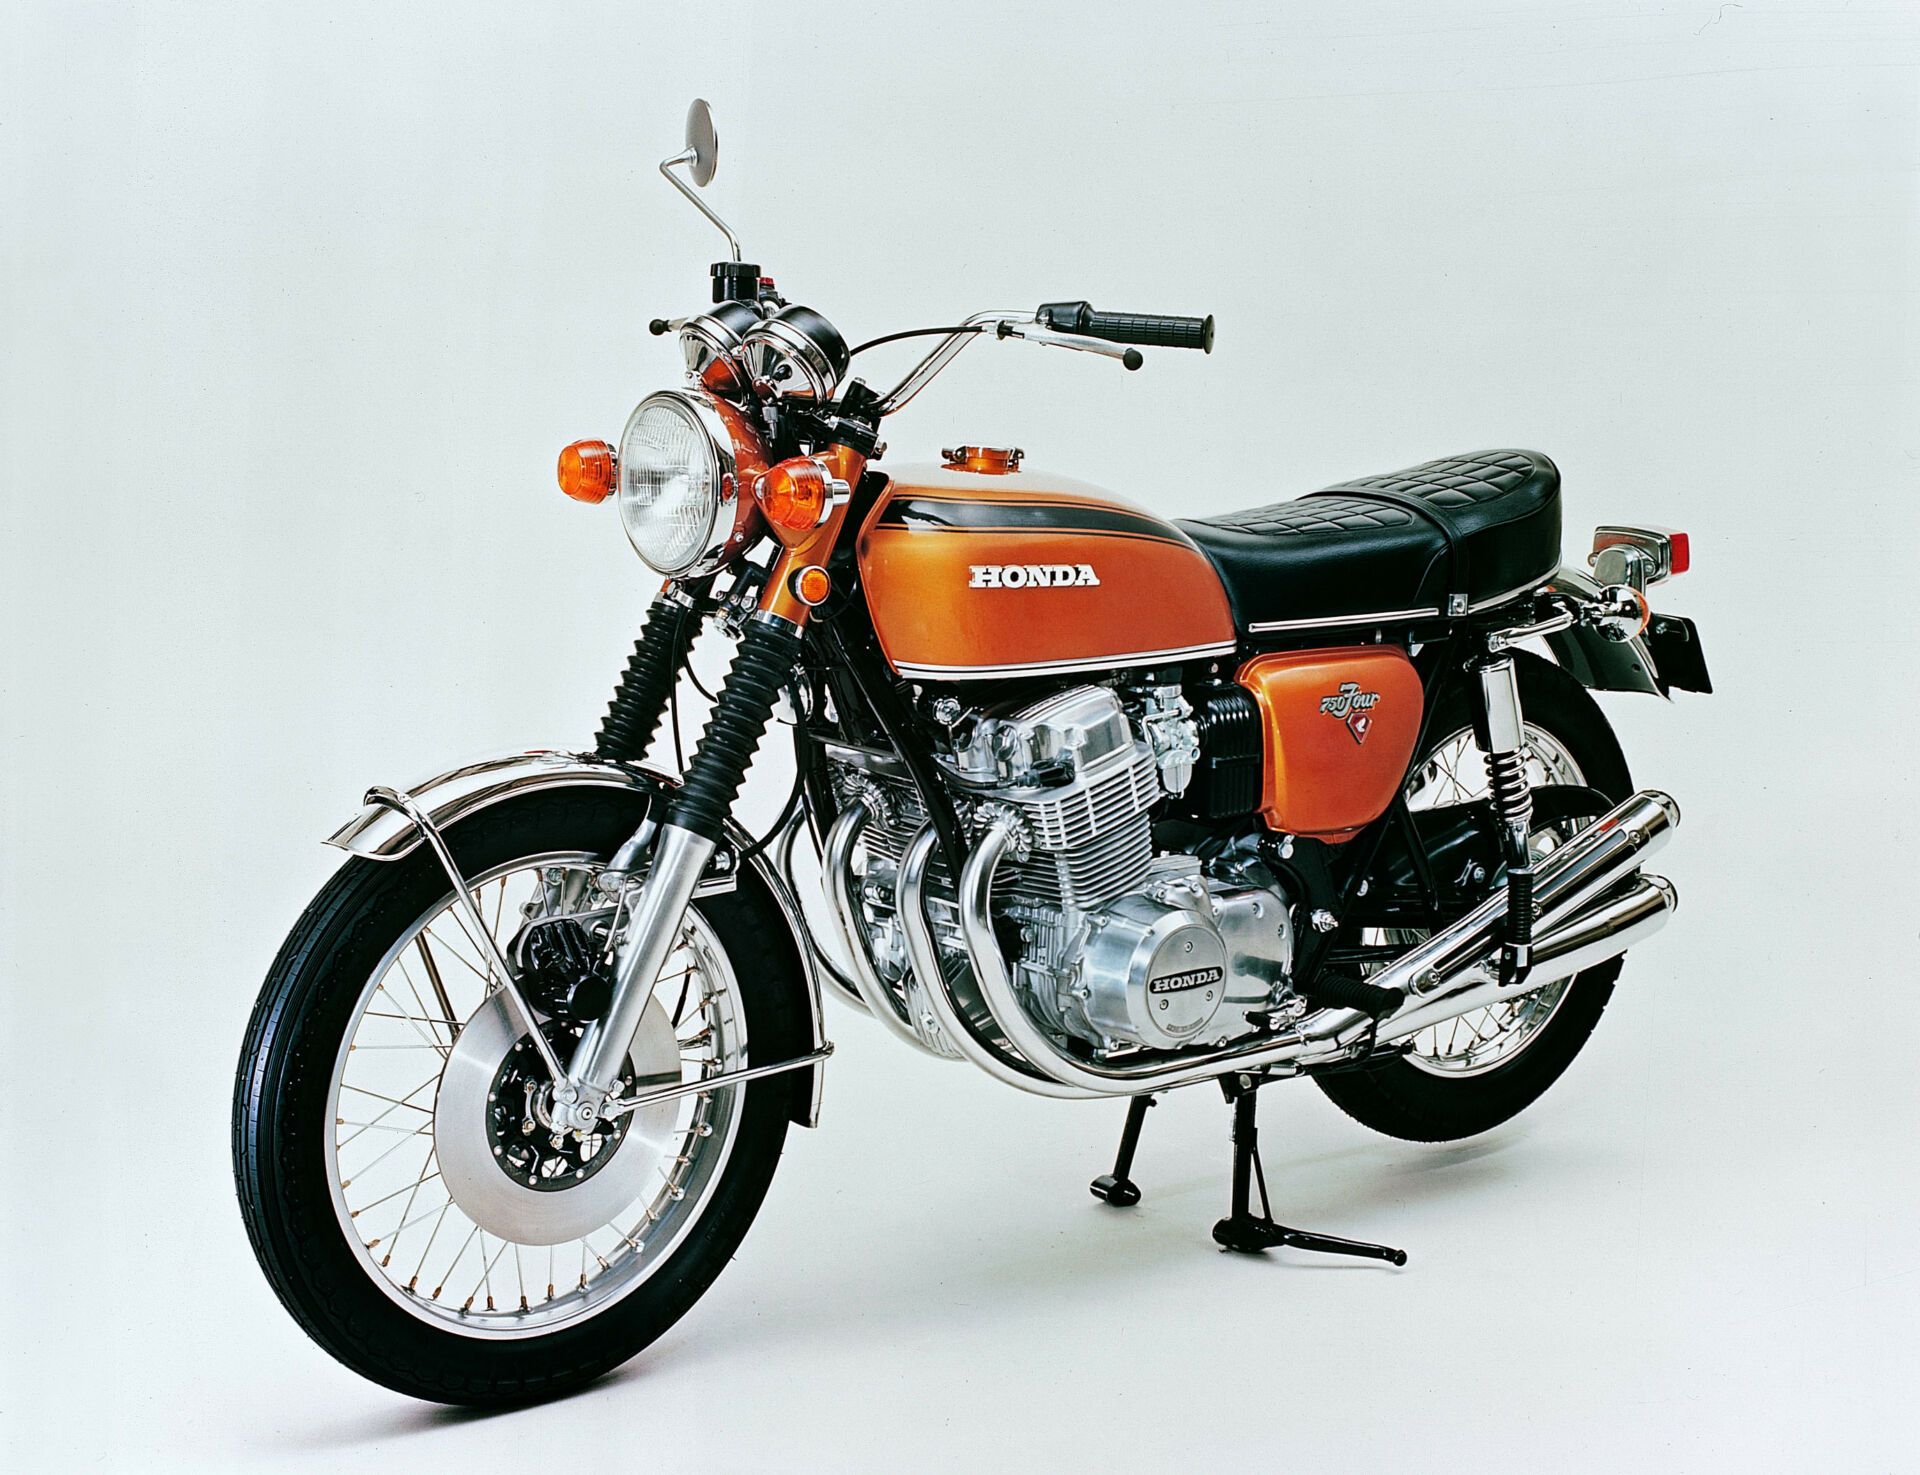 A vintage Honda CB750. Photo courtesy Vintage Japanese Motorcycle Club .